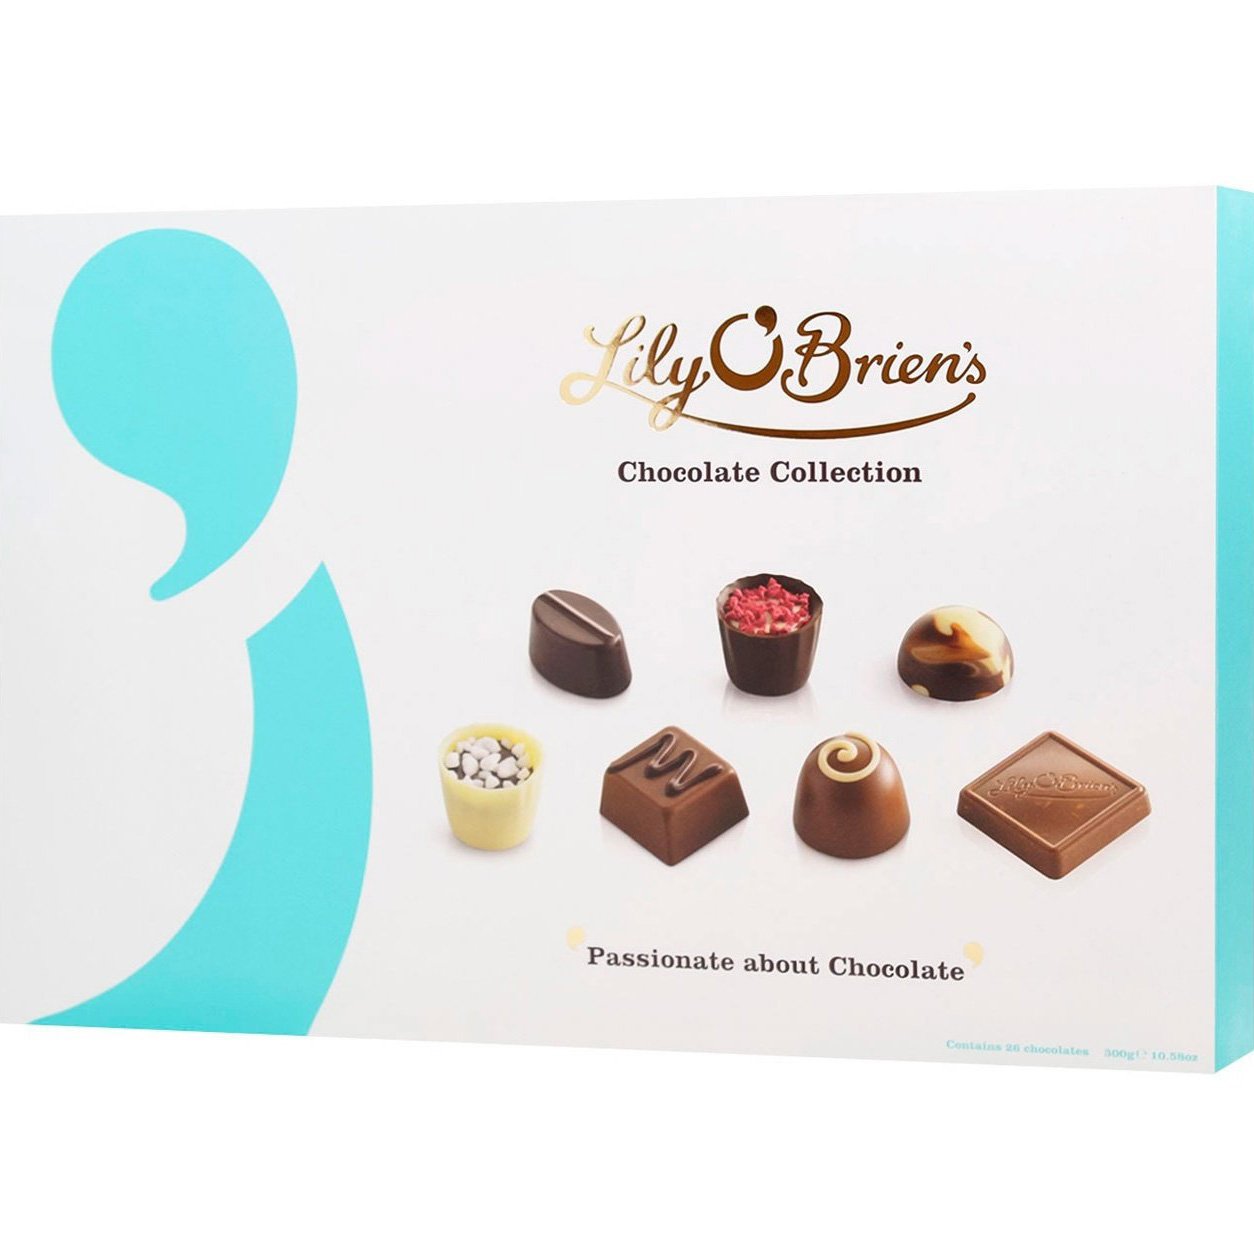 Конфеты шоколадные Lily O'brien's Desserts Collection 300 г - фото 1